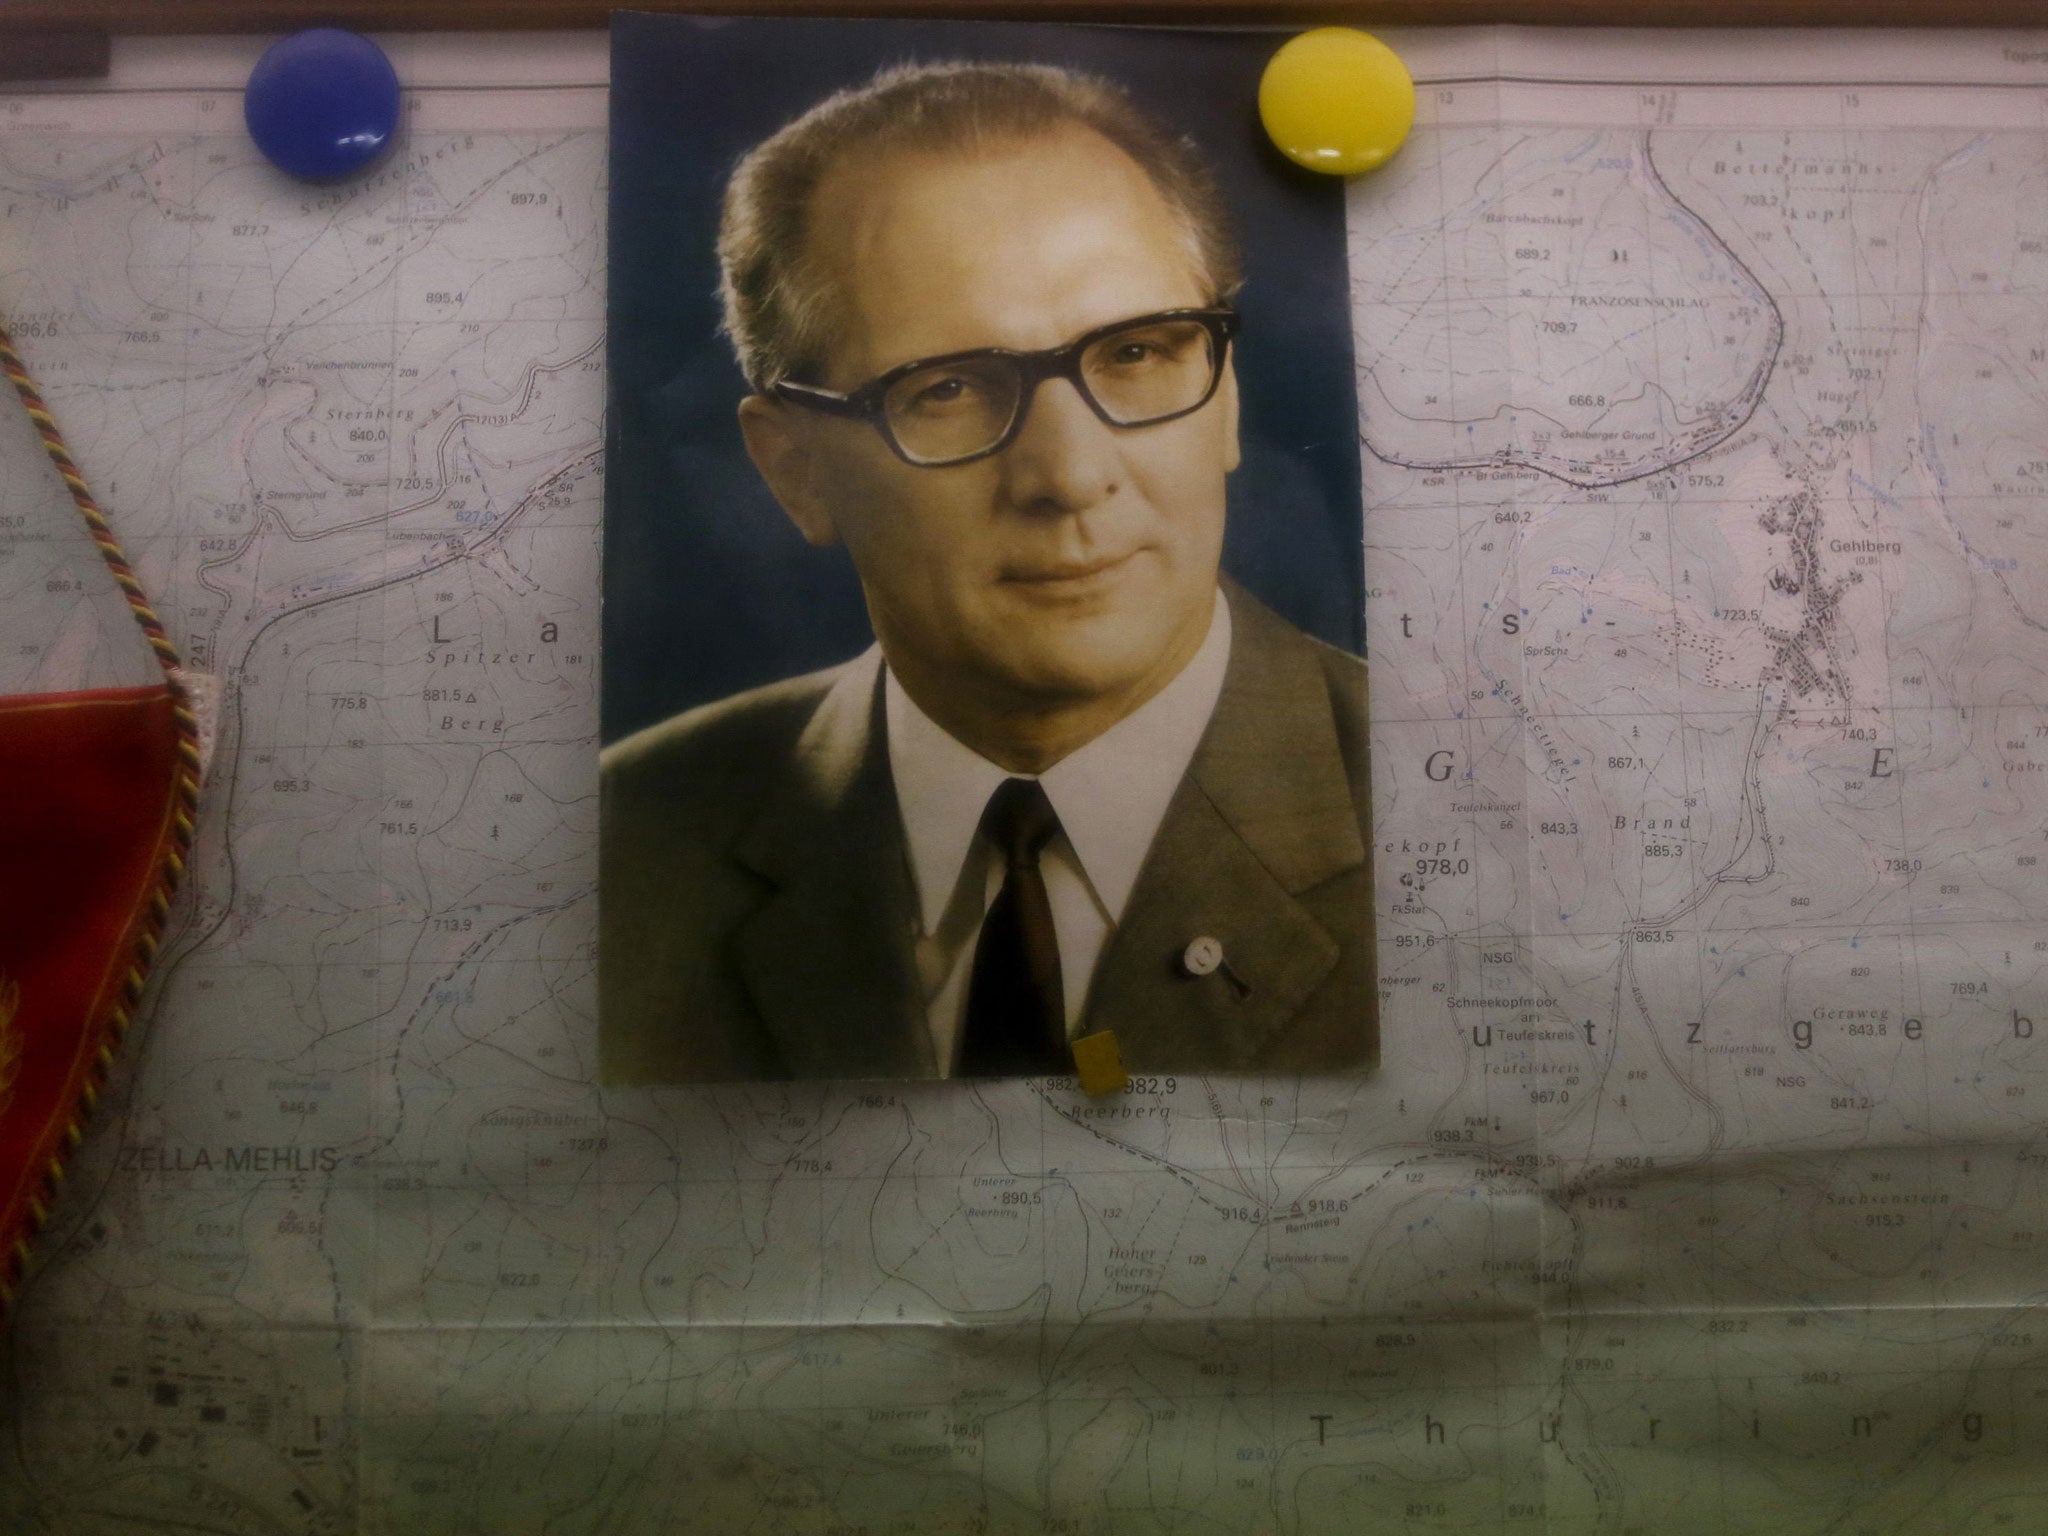 A photo of former DDR leader Erich Honecker